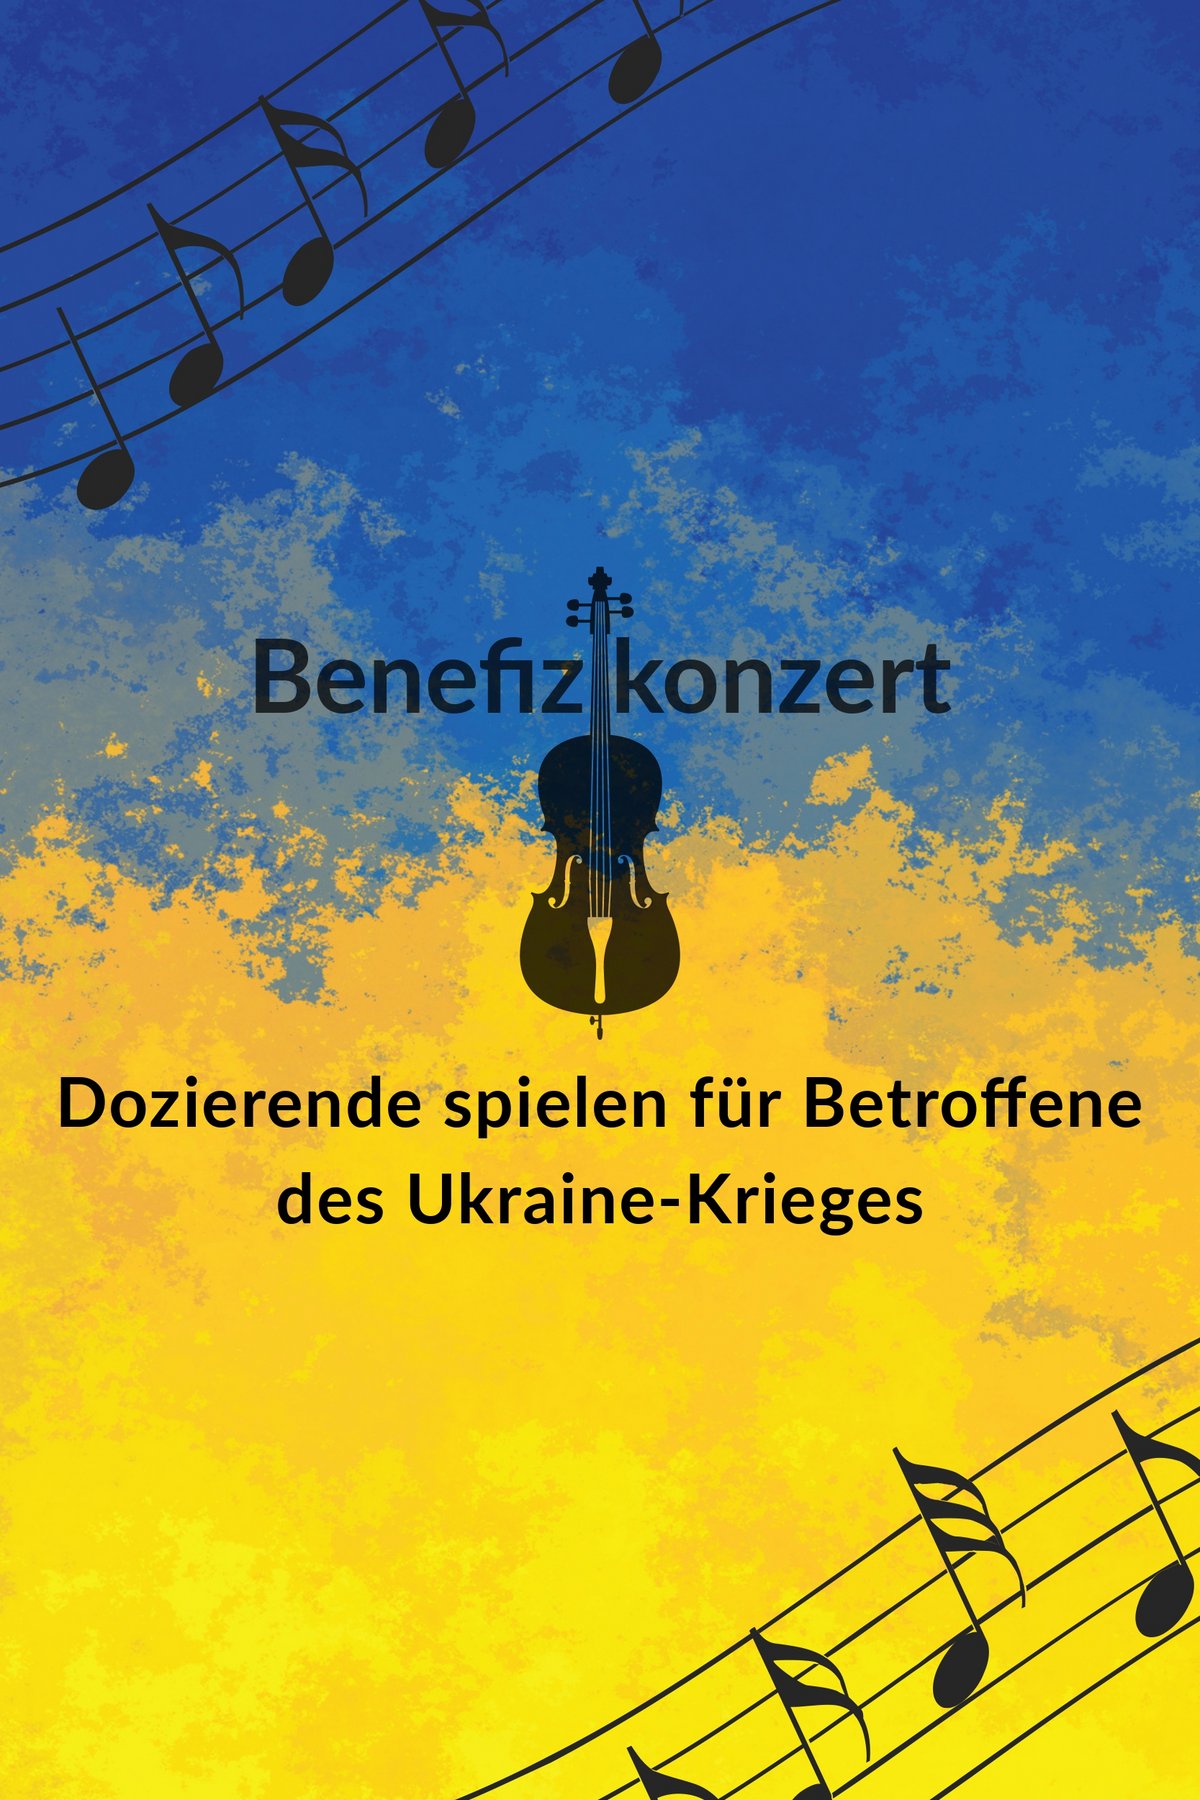 Poster for the benefit concert. Source: Instrumental and Vocal Pedagogy Program, Johannes Breuß